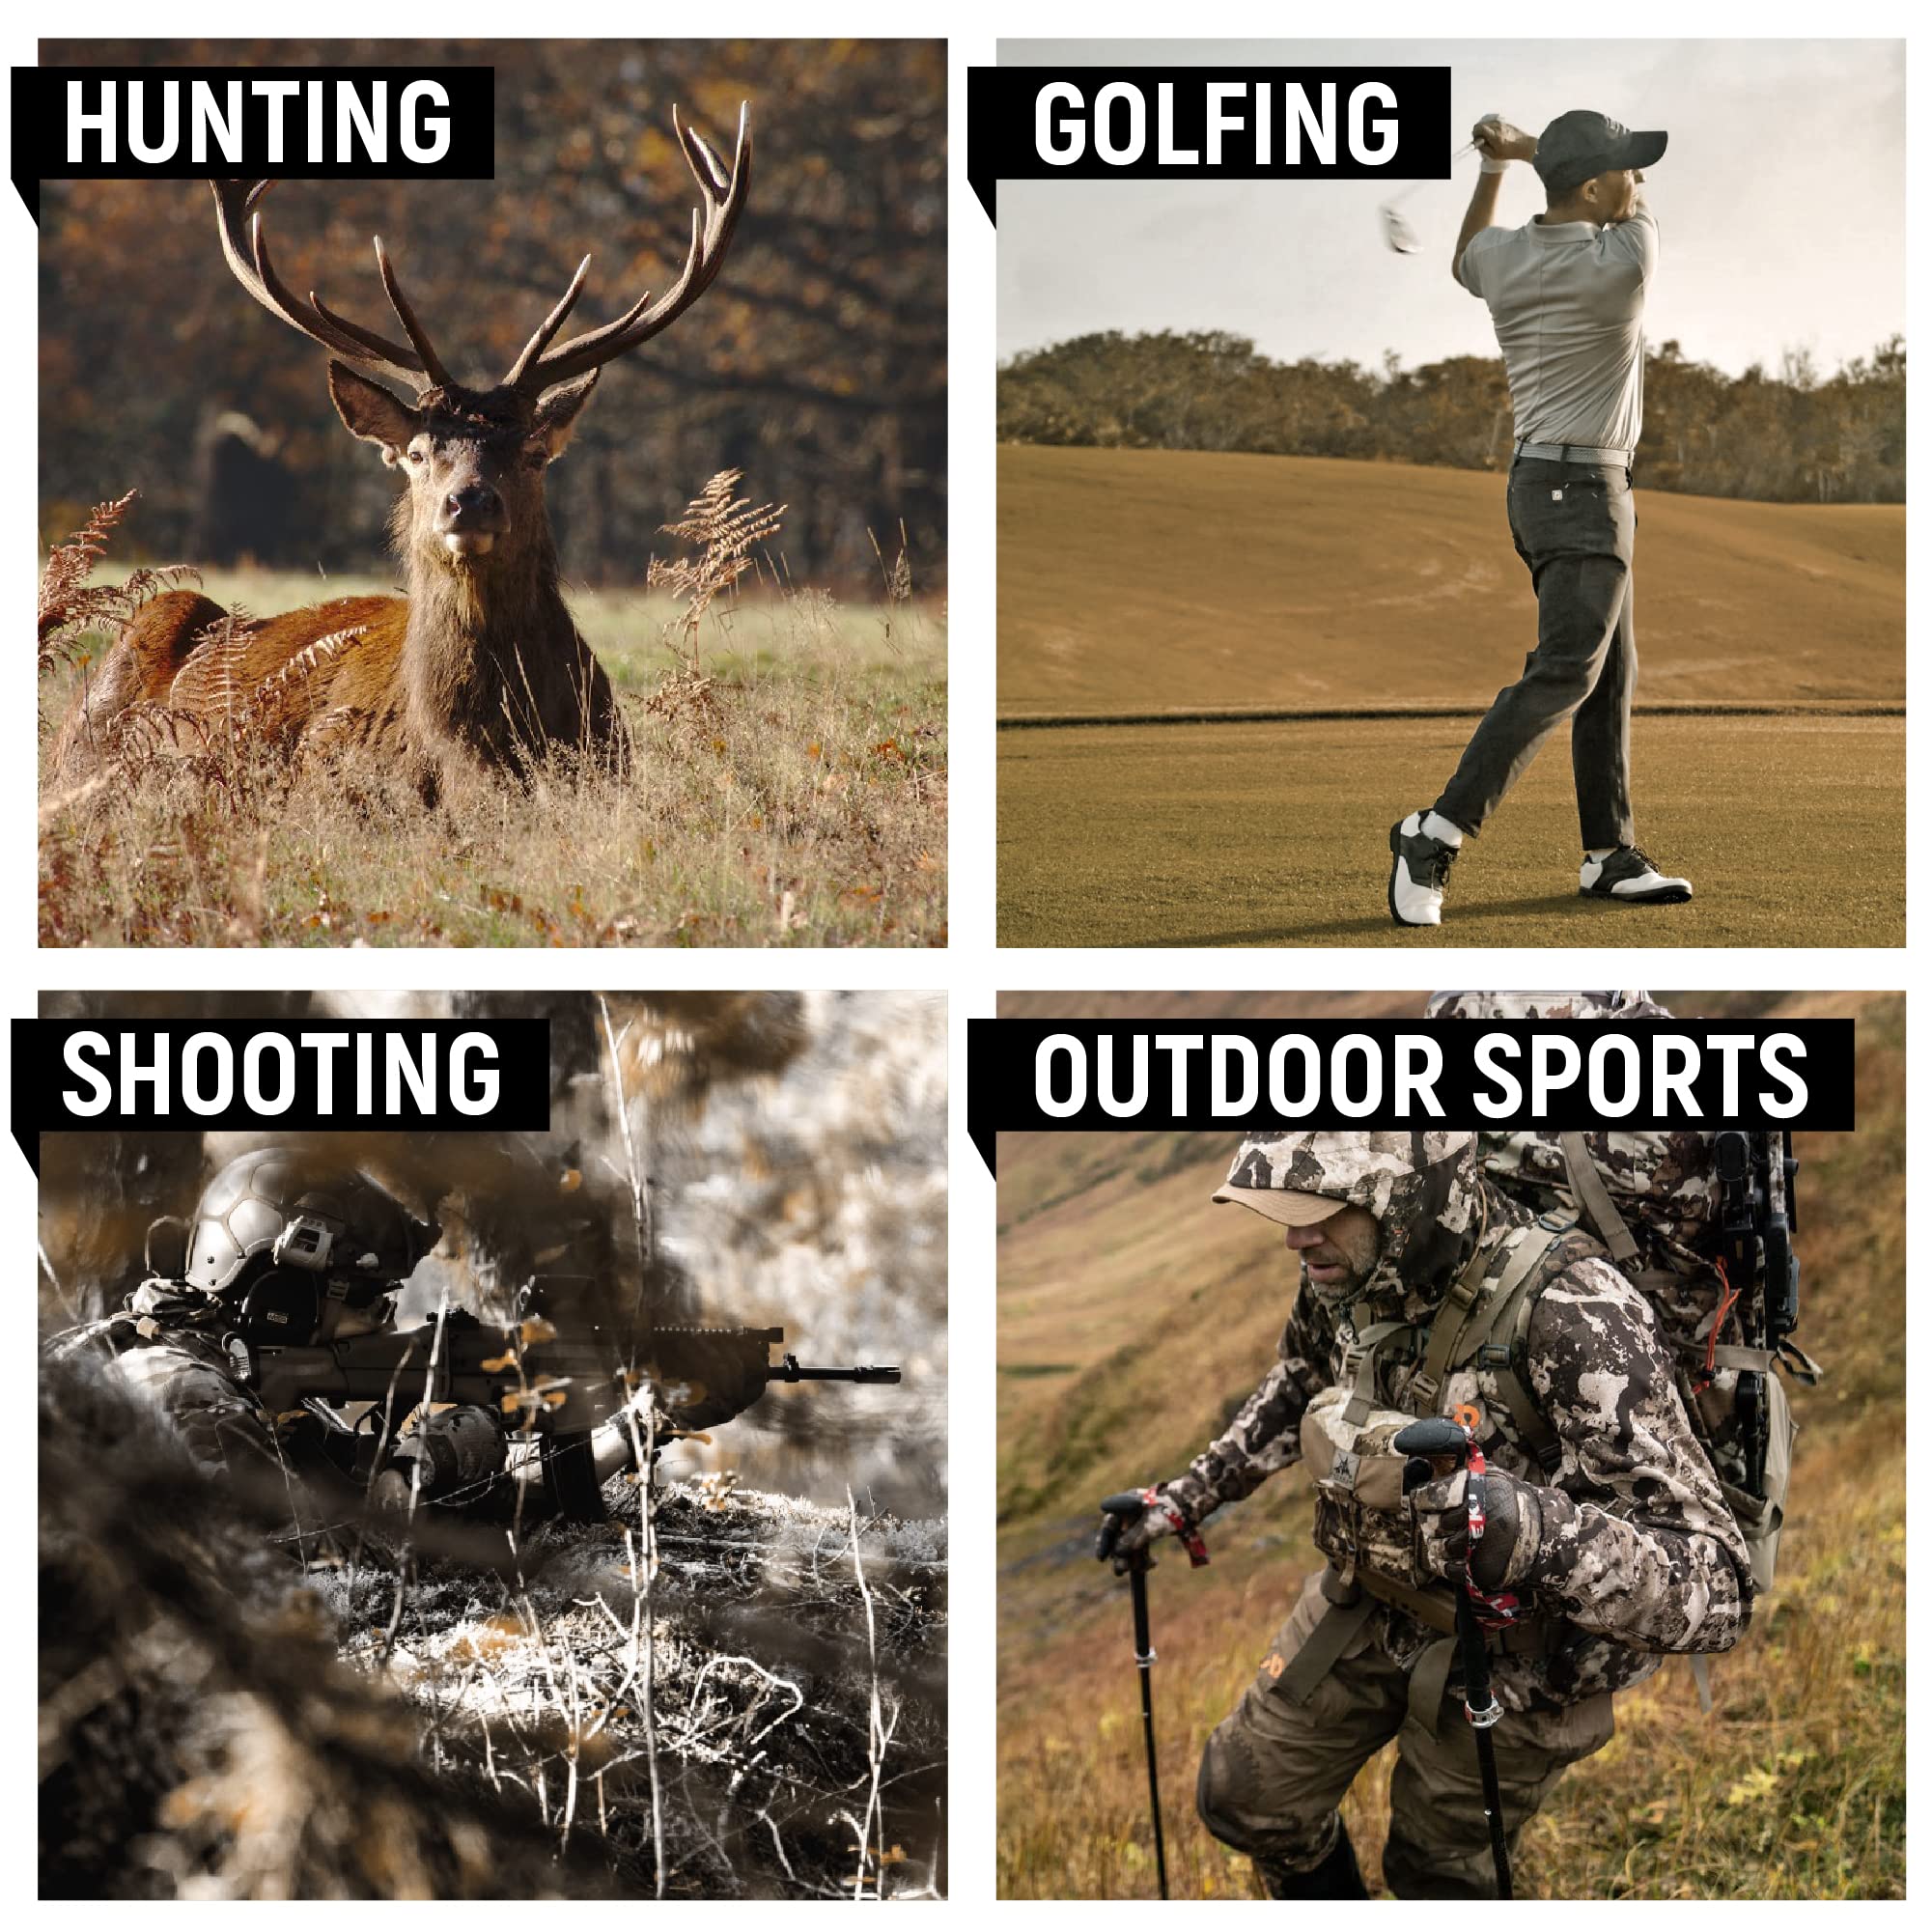 Golf/Hunting Rangefinder 6.5X Magnification 700/1000Y Waterproof Range Finder, Distance Measurement, Slope Compensation,Speed Modes, Lightweight, for Hunting, Golfing and Shooting